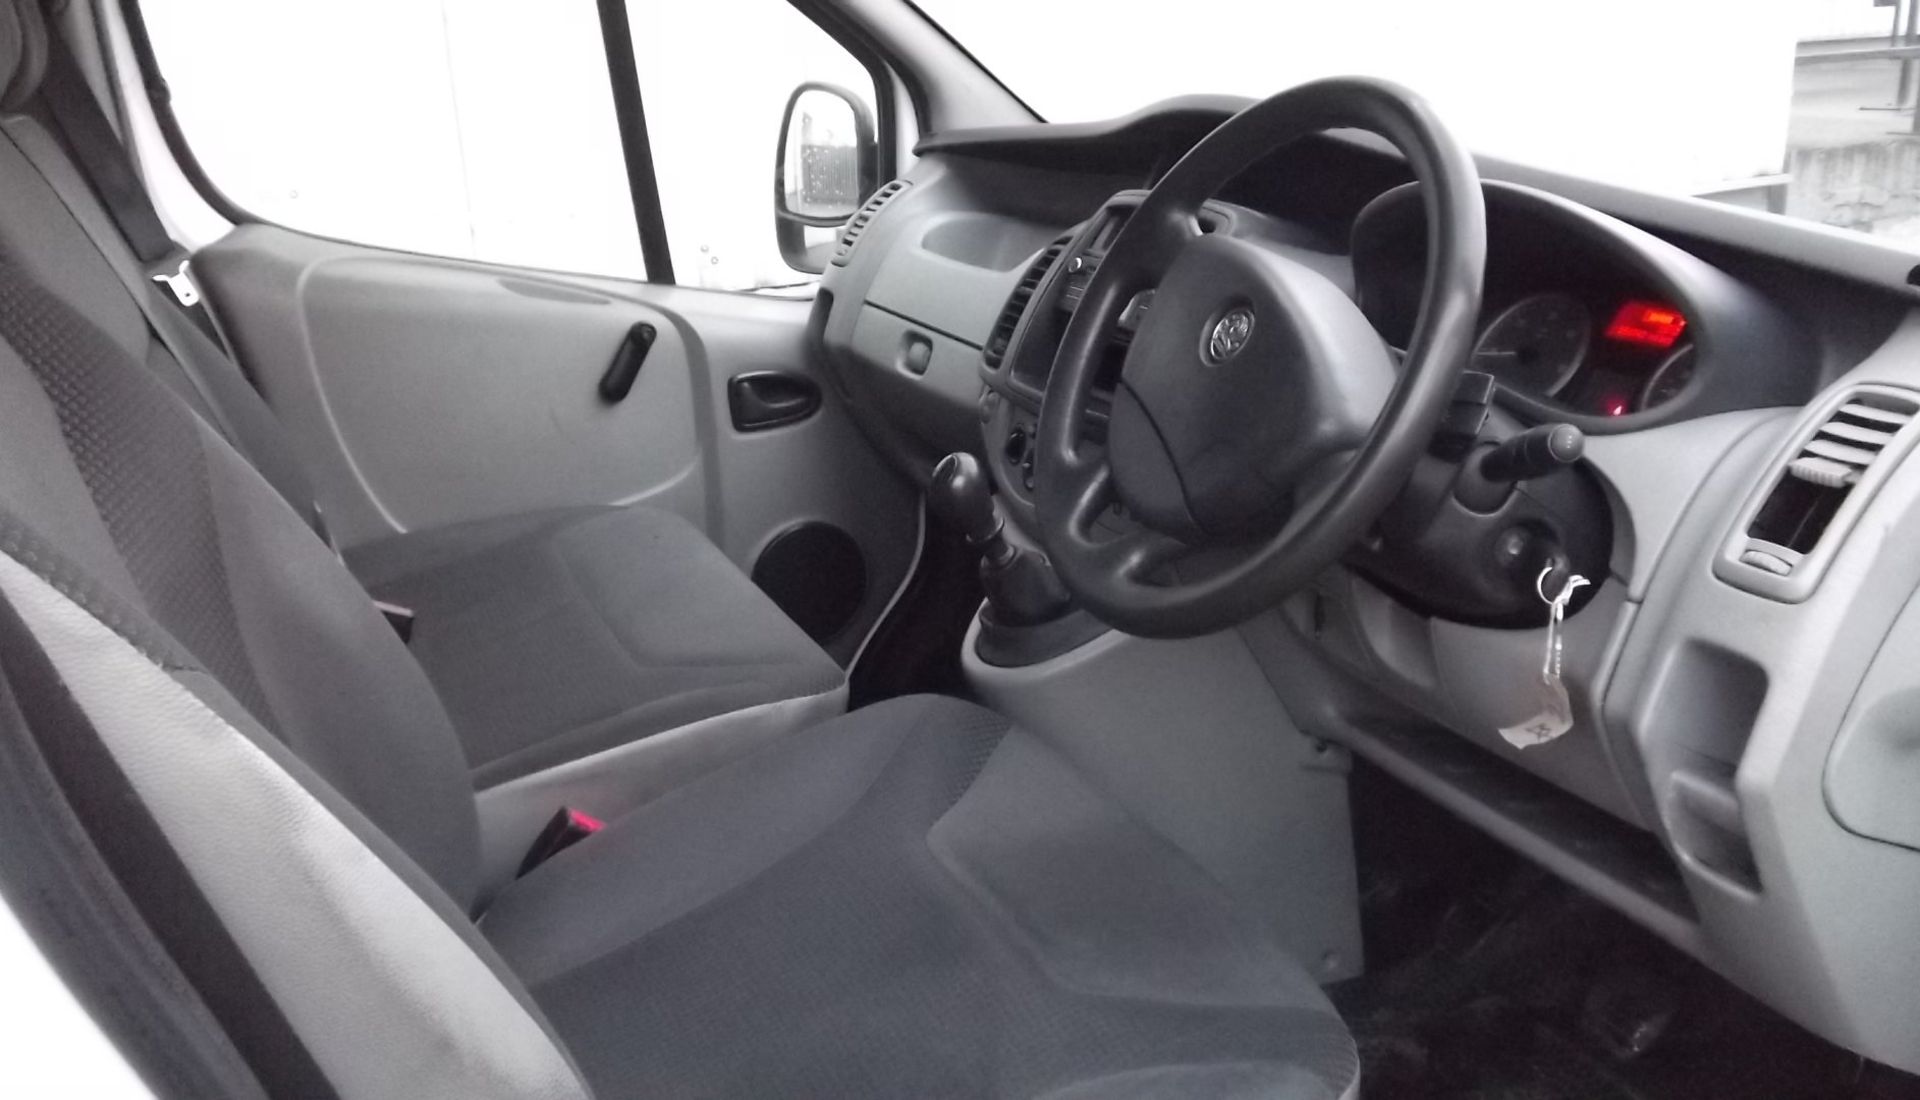 2014 Vauxhall Vivaro 2900 Cdti Lwb high roof panel van 5Dr - Image 3 of 12